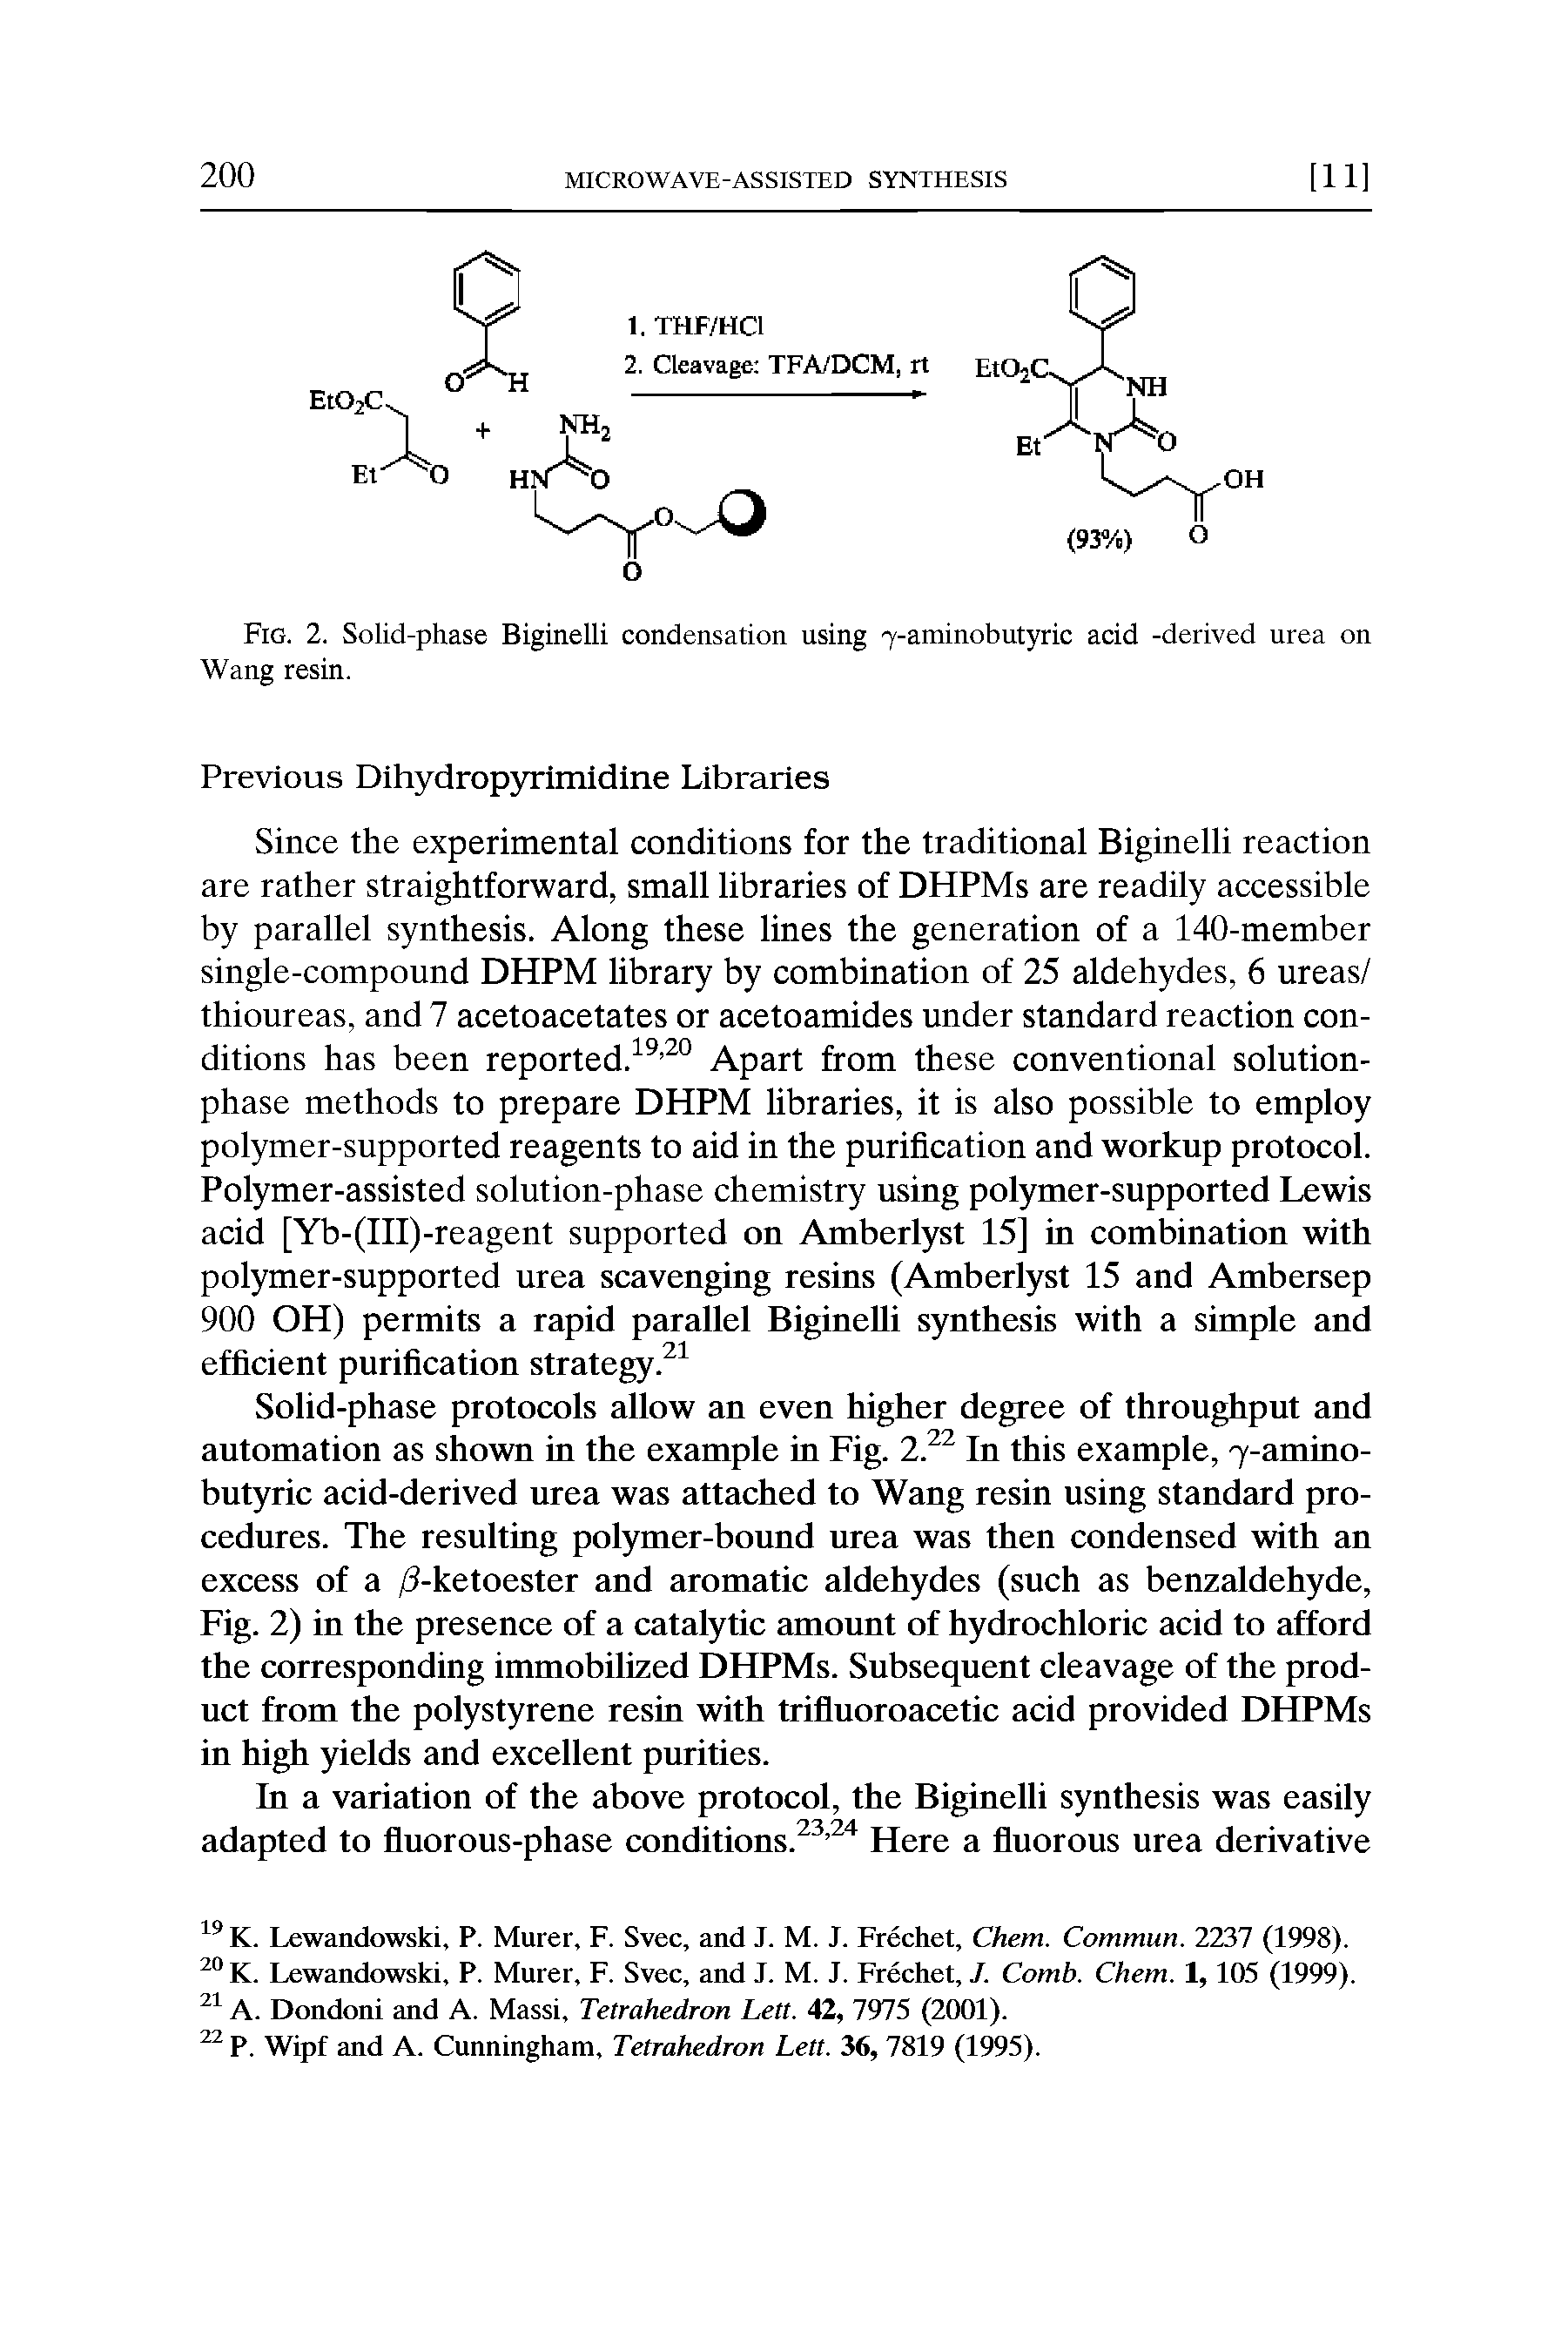 Fig. 2. Solid-phase Biginelli condensation using 7-aminobutyric acid -derived urea on Wang resin.